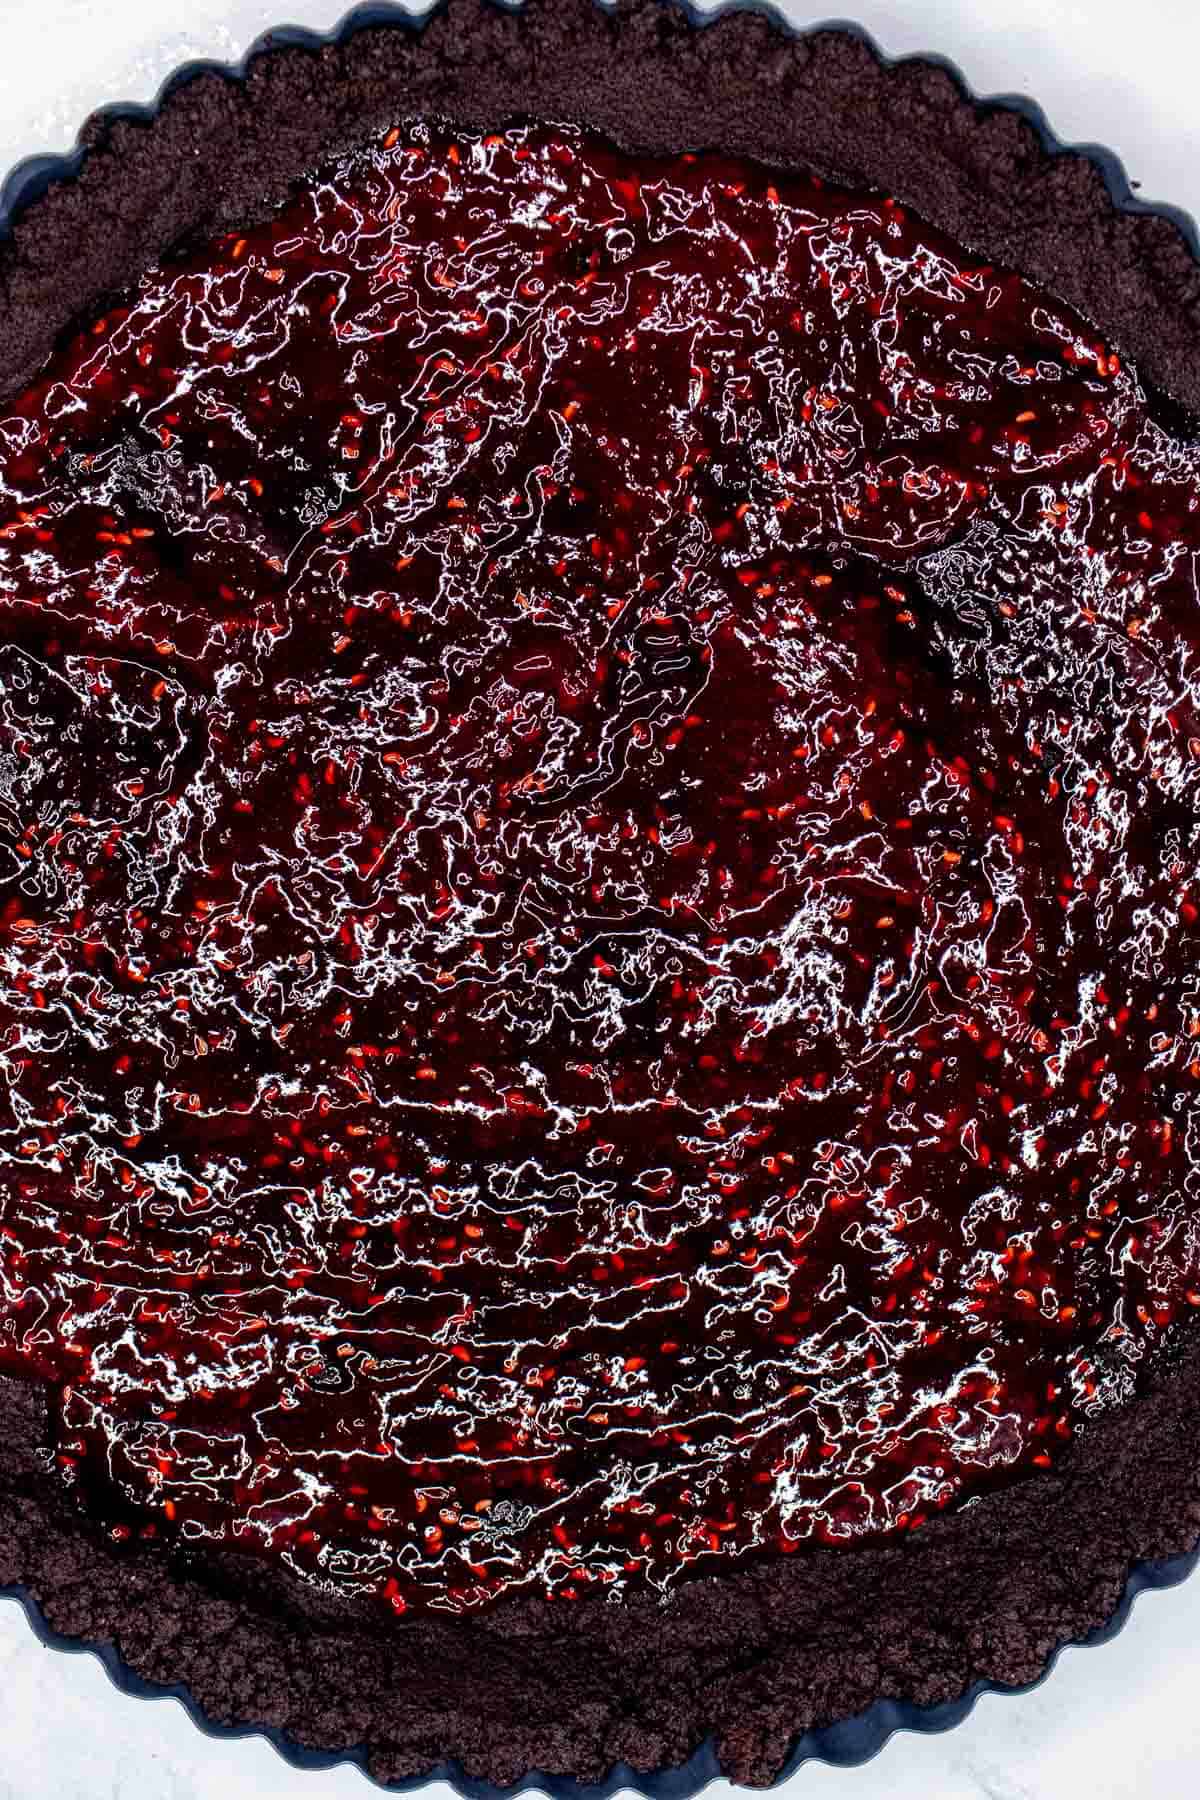 Raspberry preserves coating the bottom of a chocolate tart.